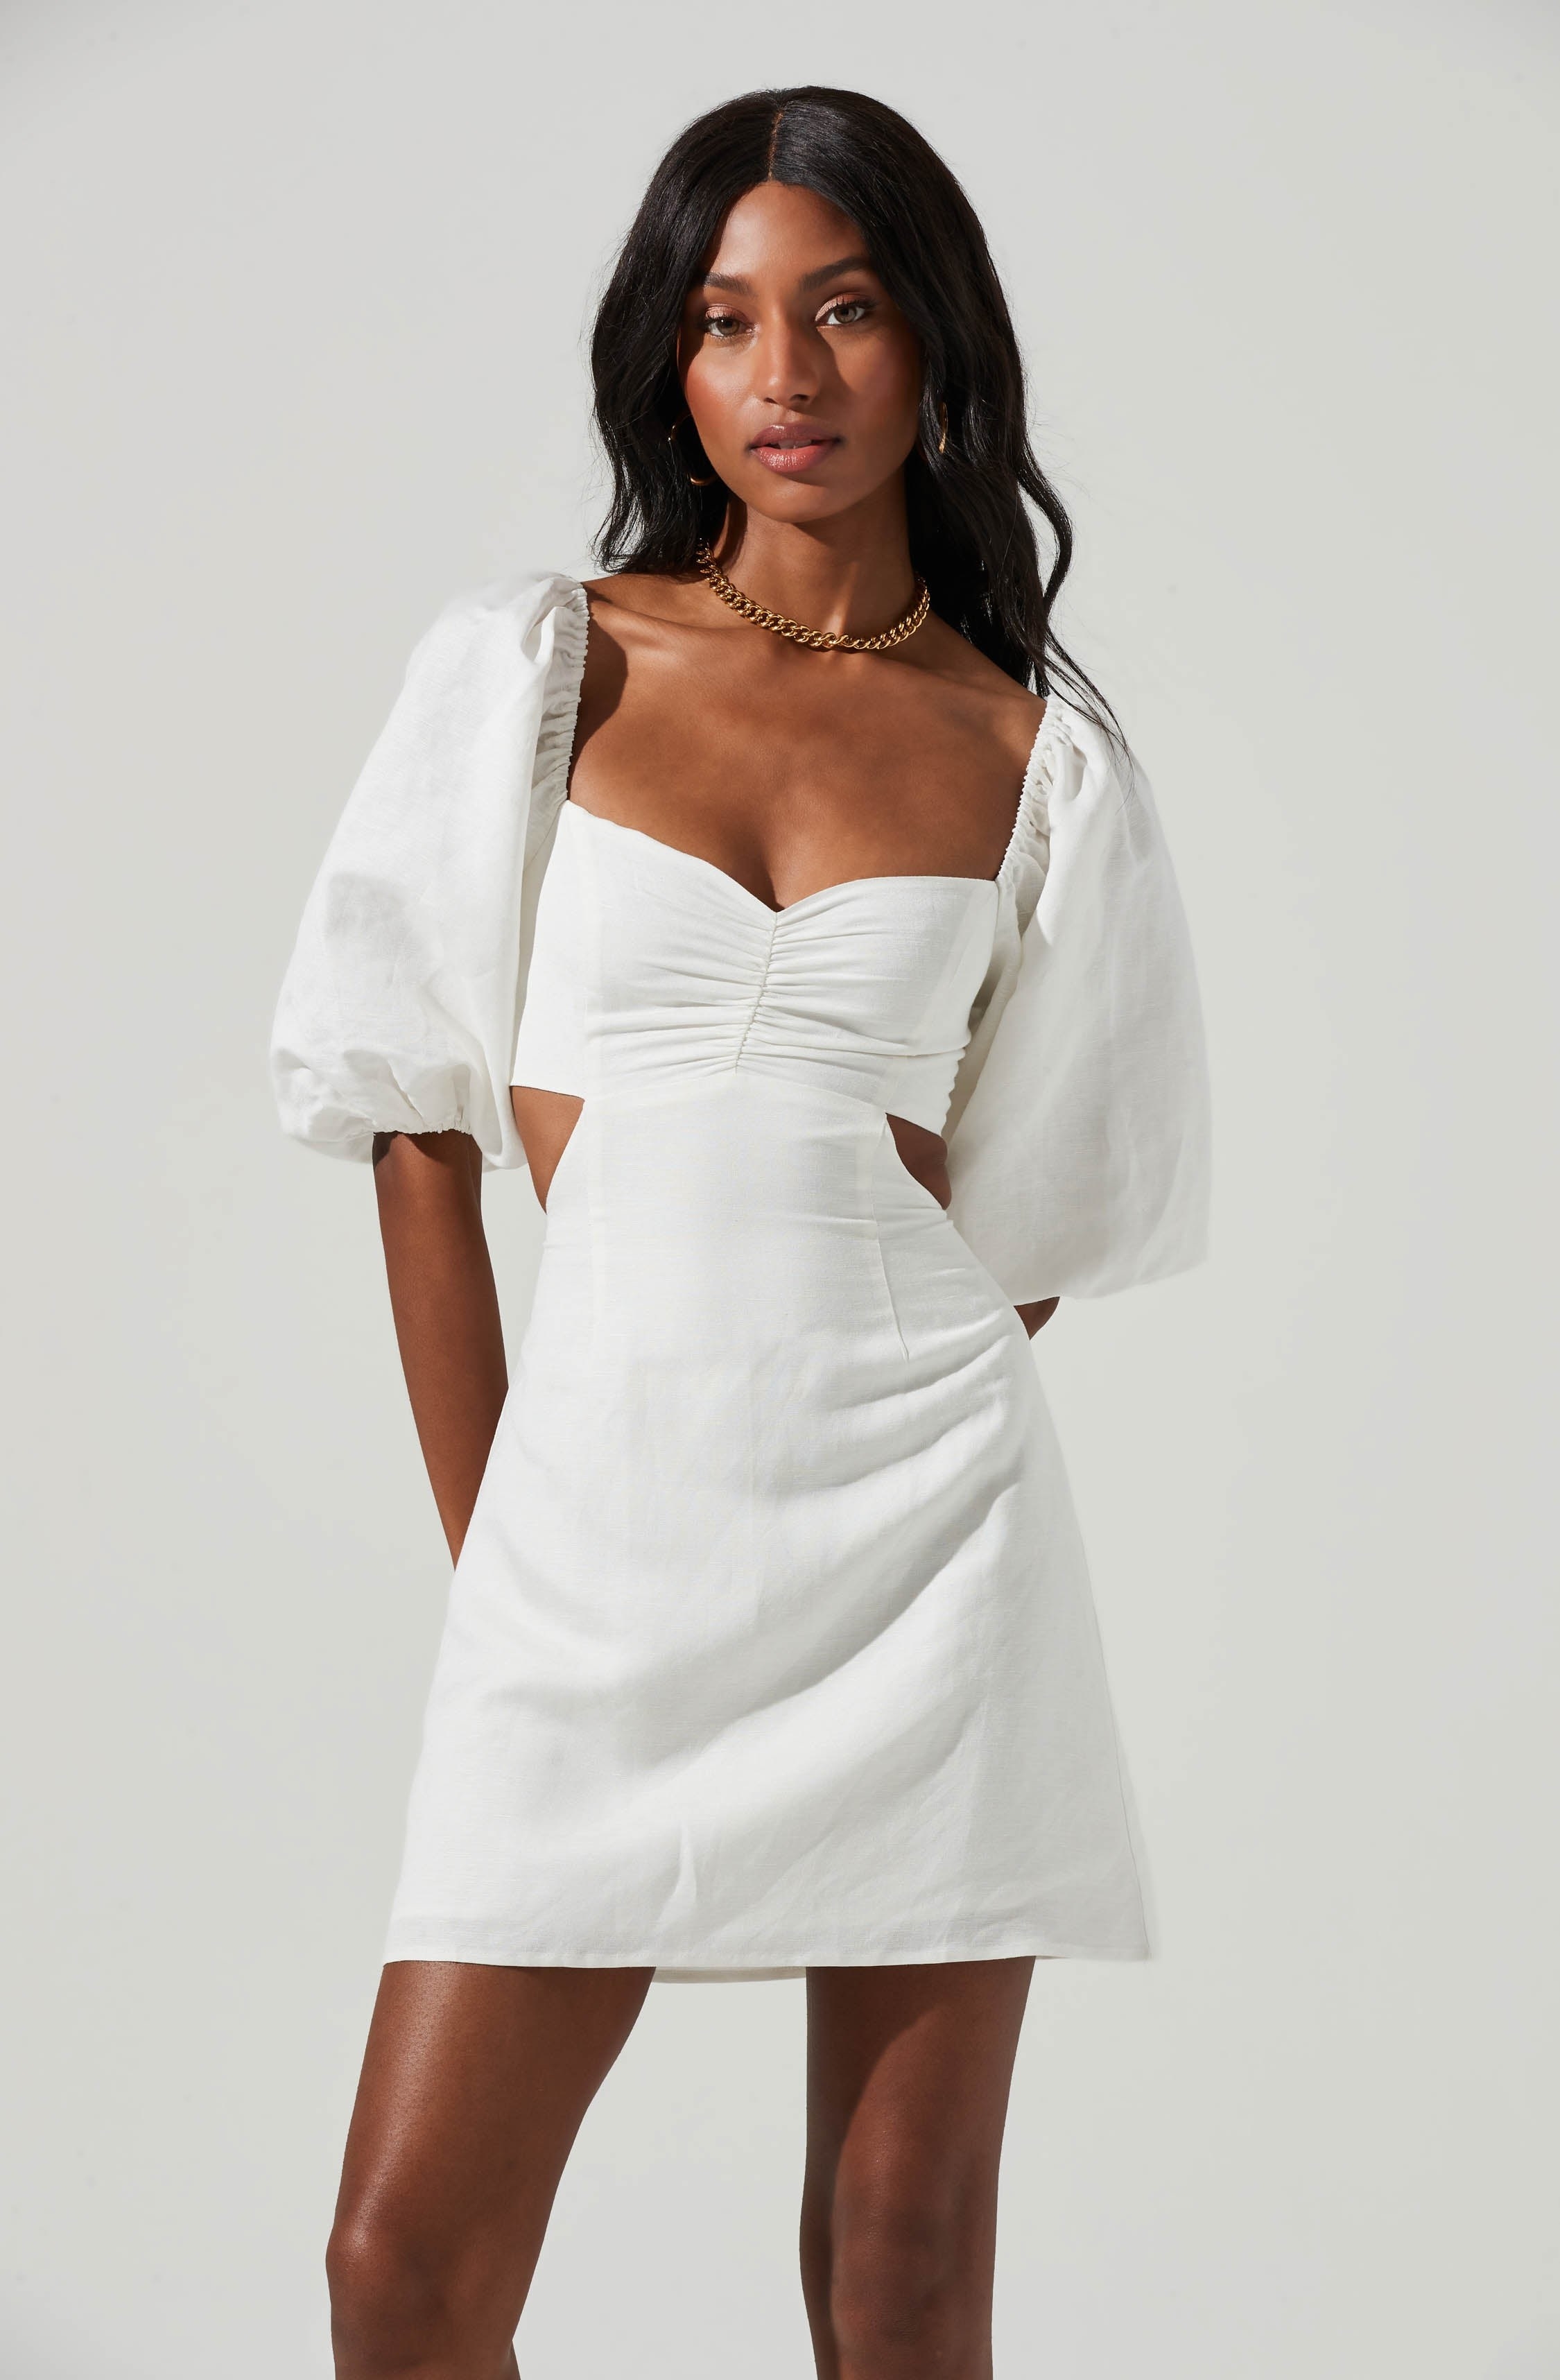 model wearing the white dress